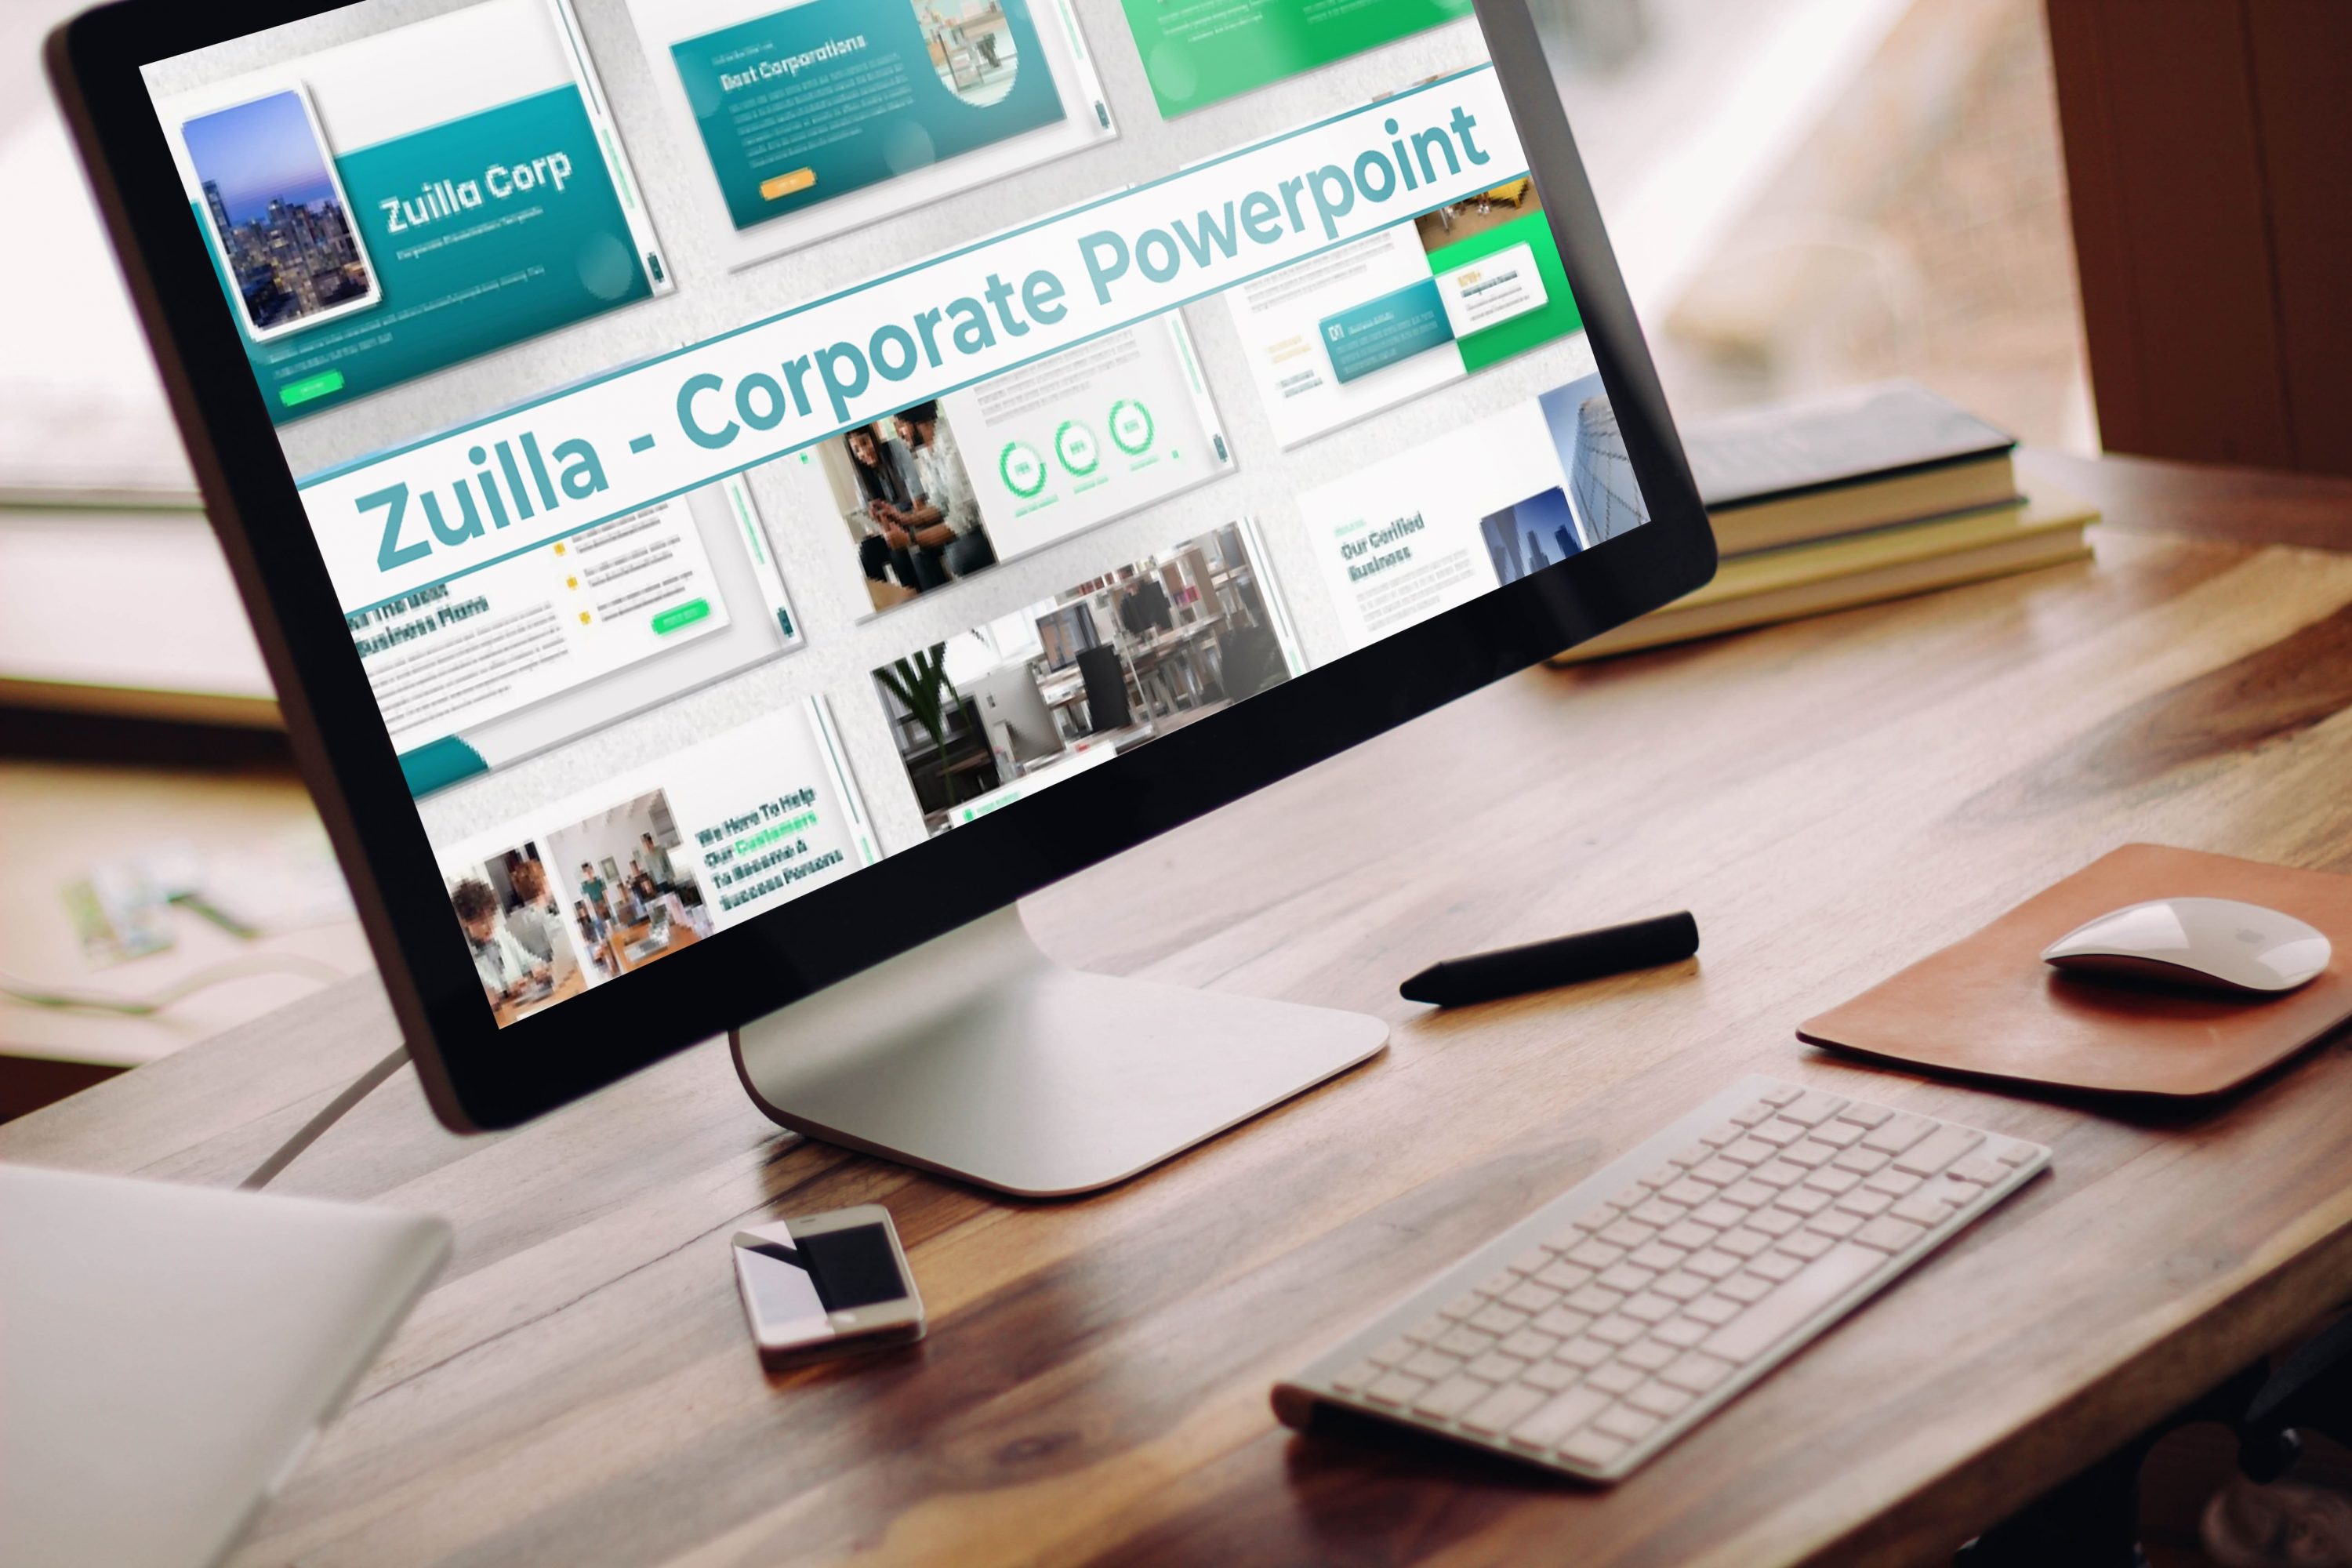 Desktop option of the Zuilla - Corporate Powerpoint.